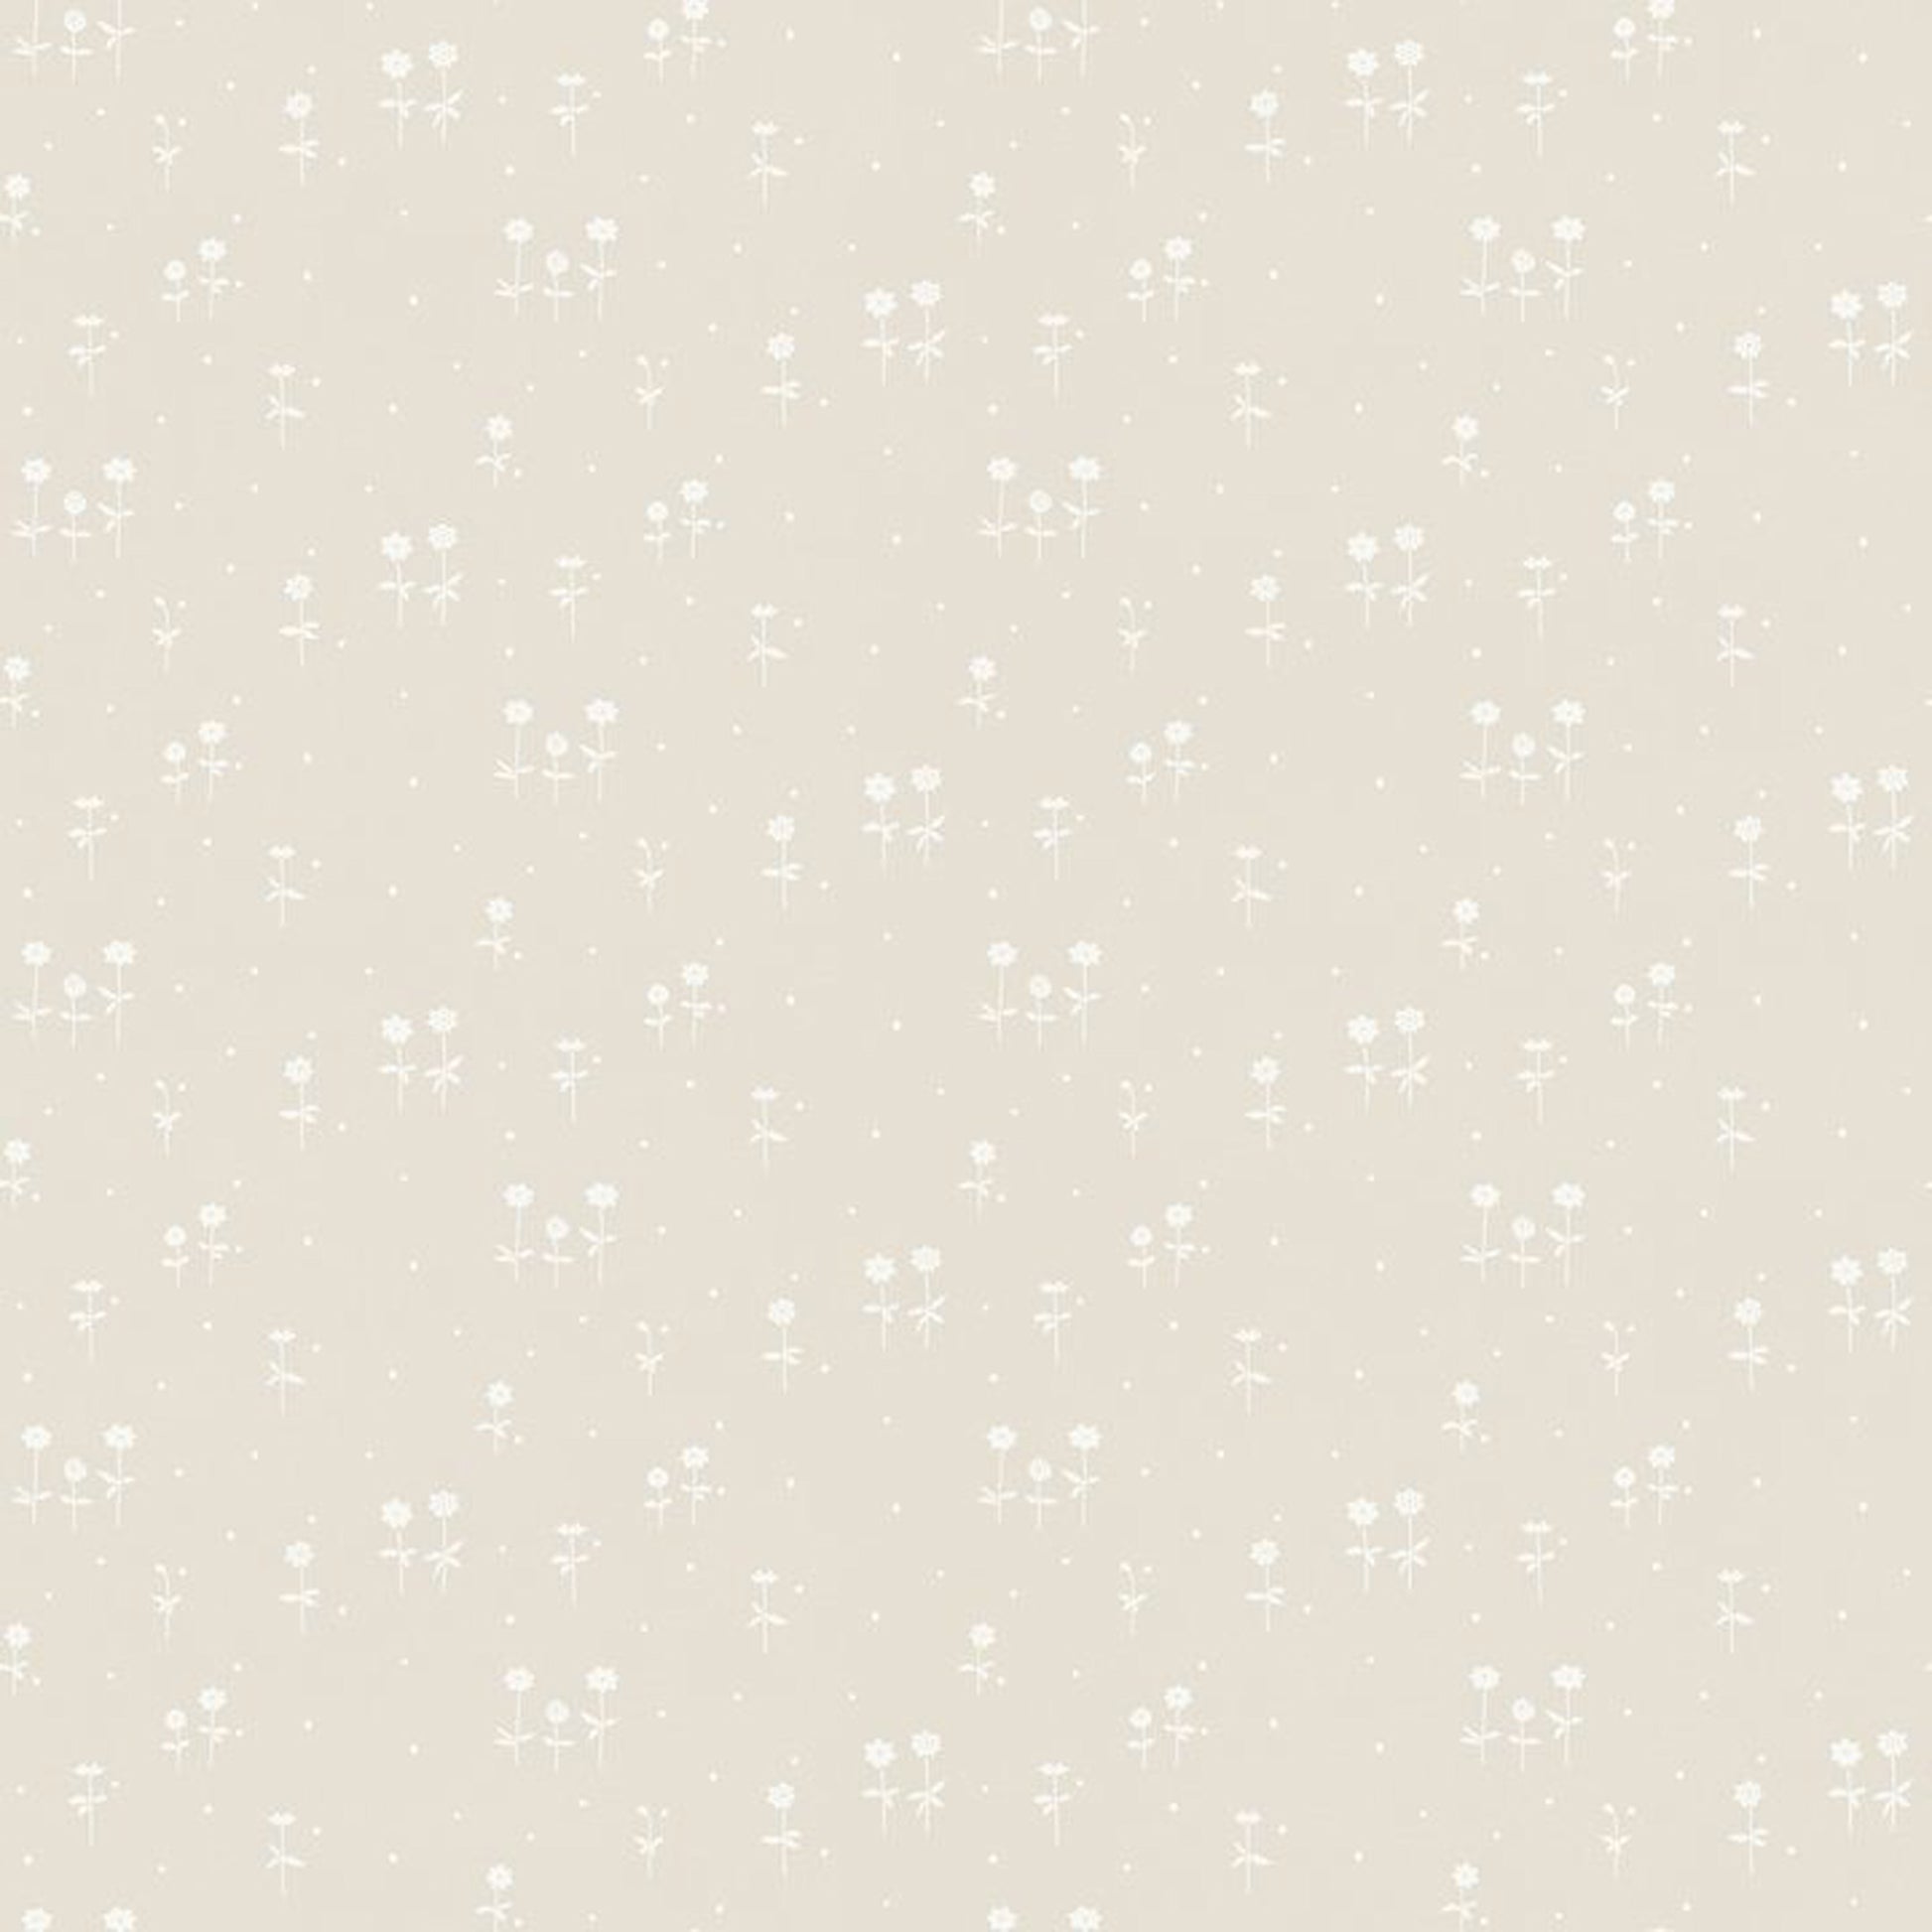 802-19 Bianca cream, Ett Hem by Sandberg Wallpaper